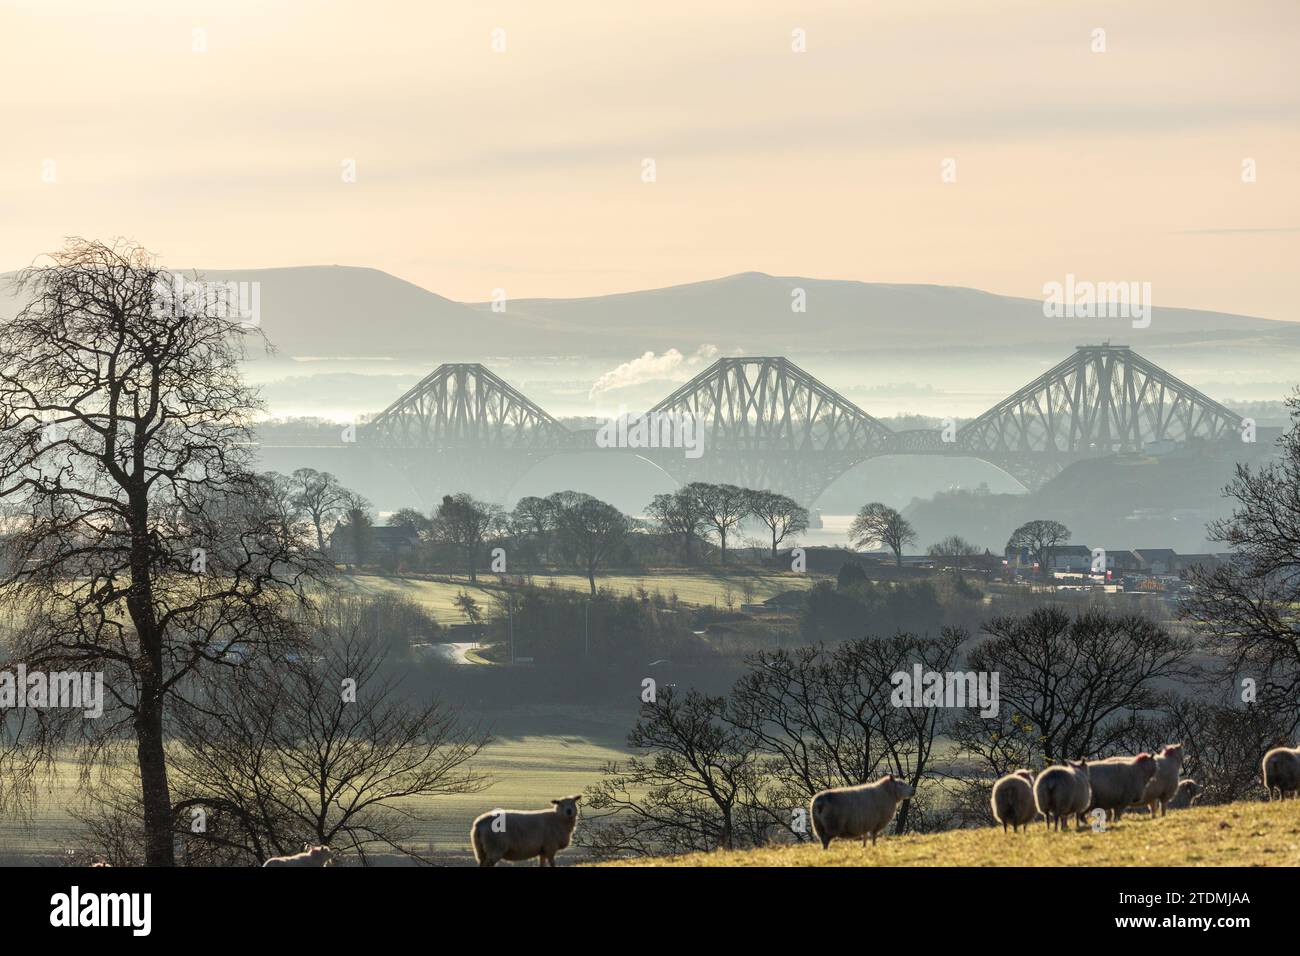 The Forth Rail Bridge seen from near Dunfermline, Fife, Scotland Stock Photo